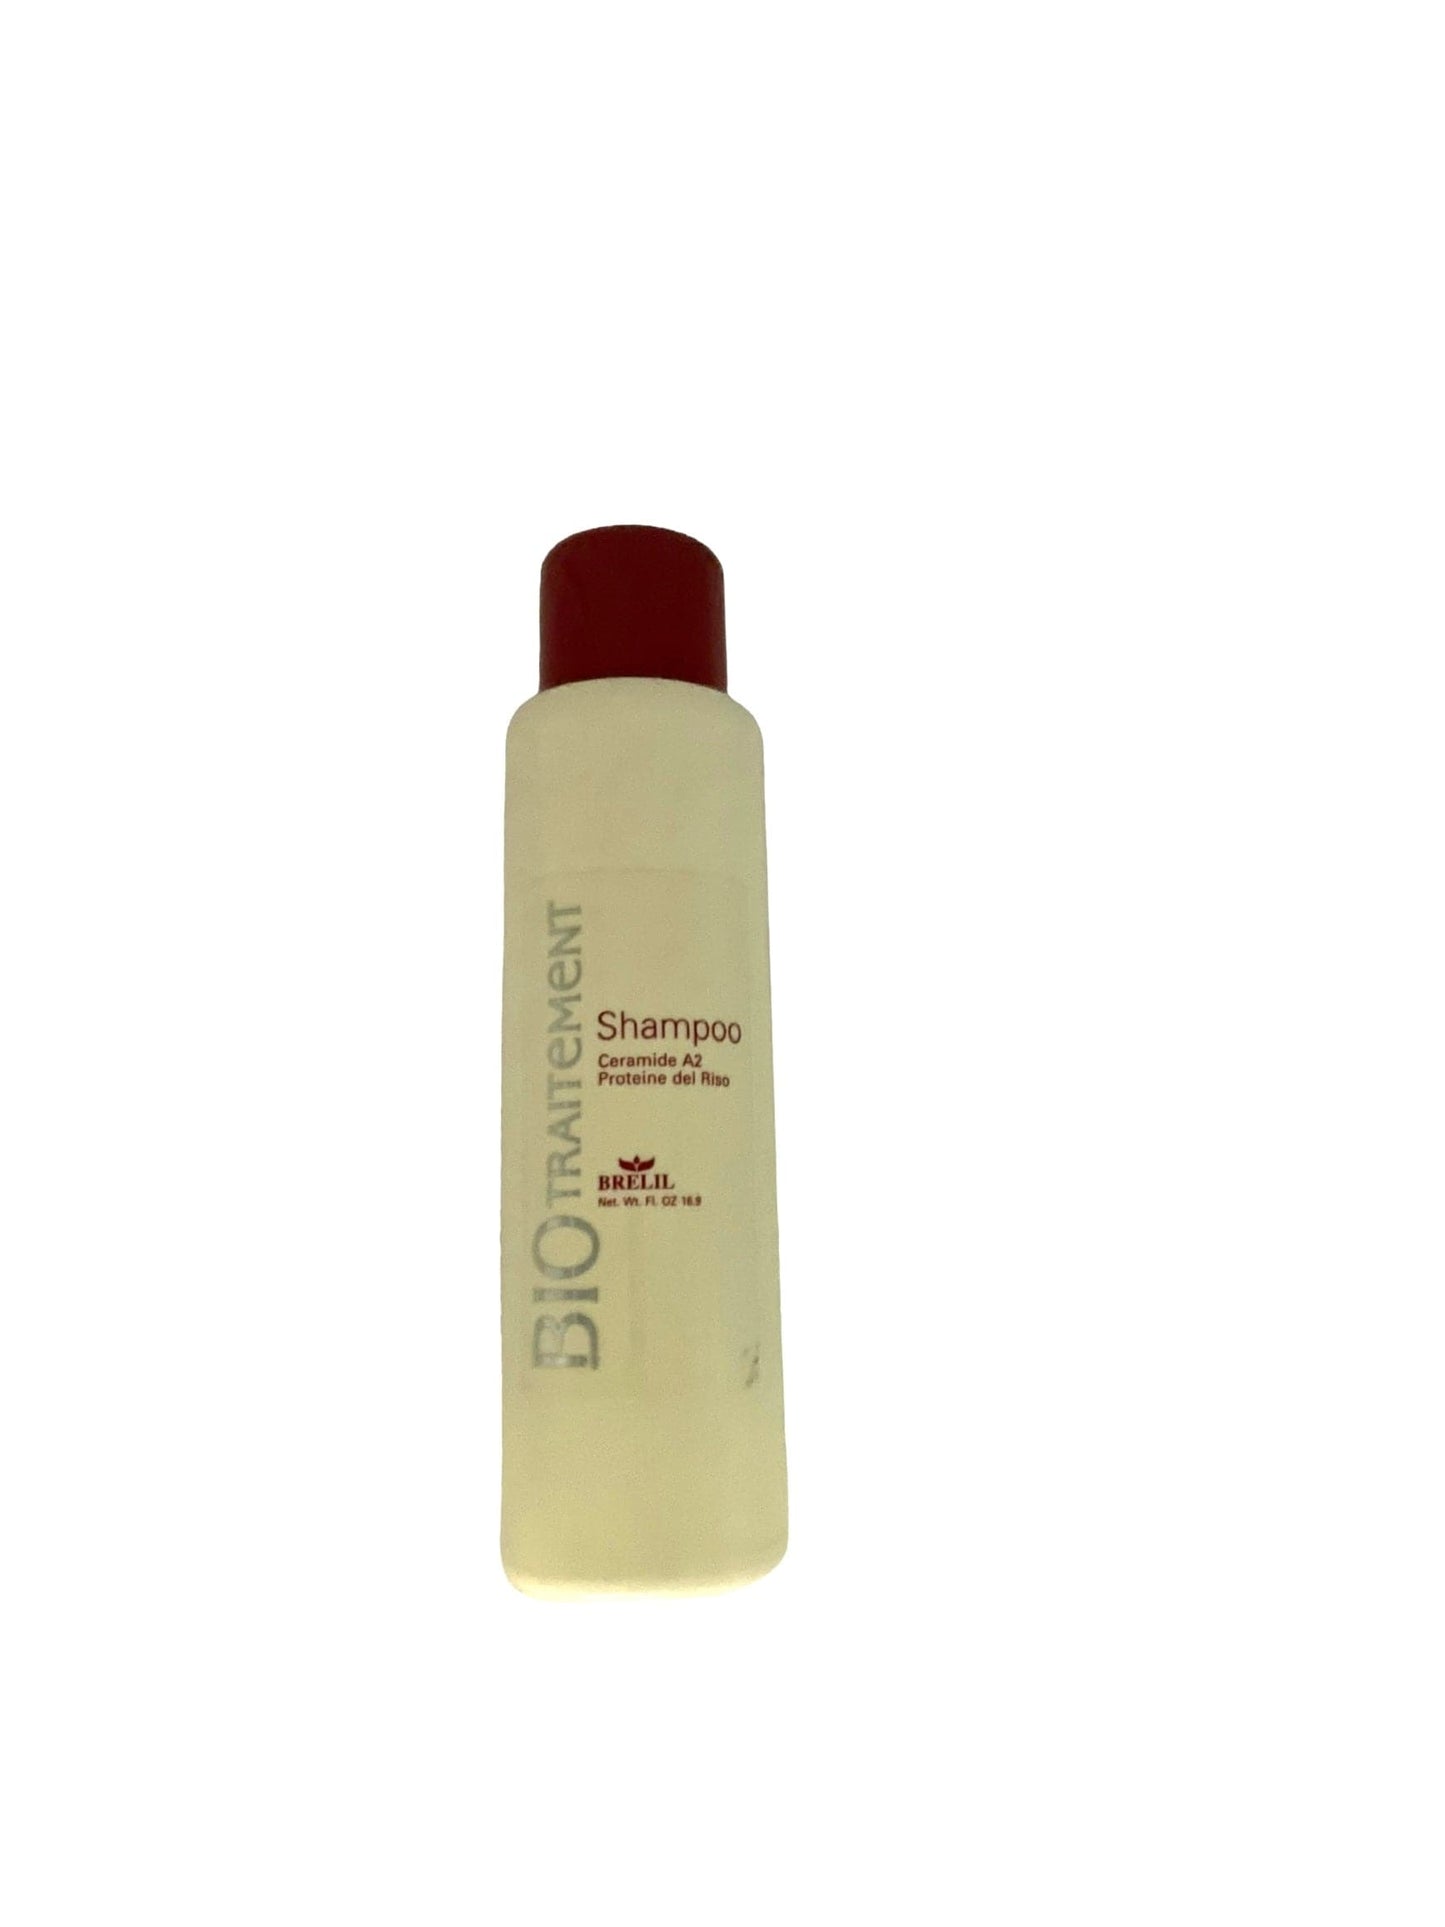 Brelil Bio Treatment Hair Shampoo With Ceramide A2 & Rice Proteins 16.9oz